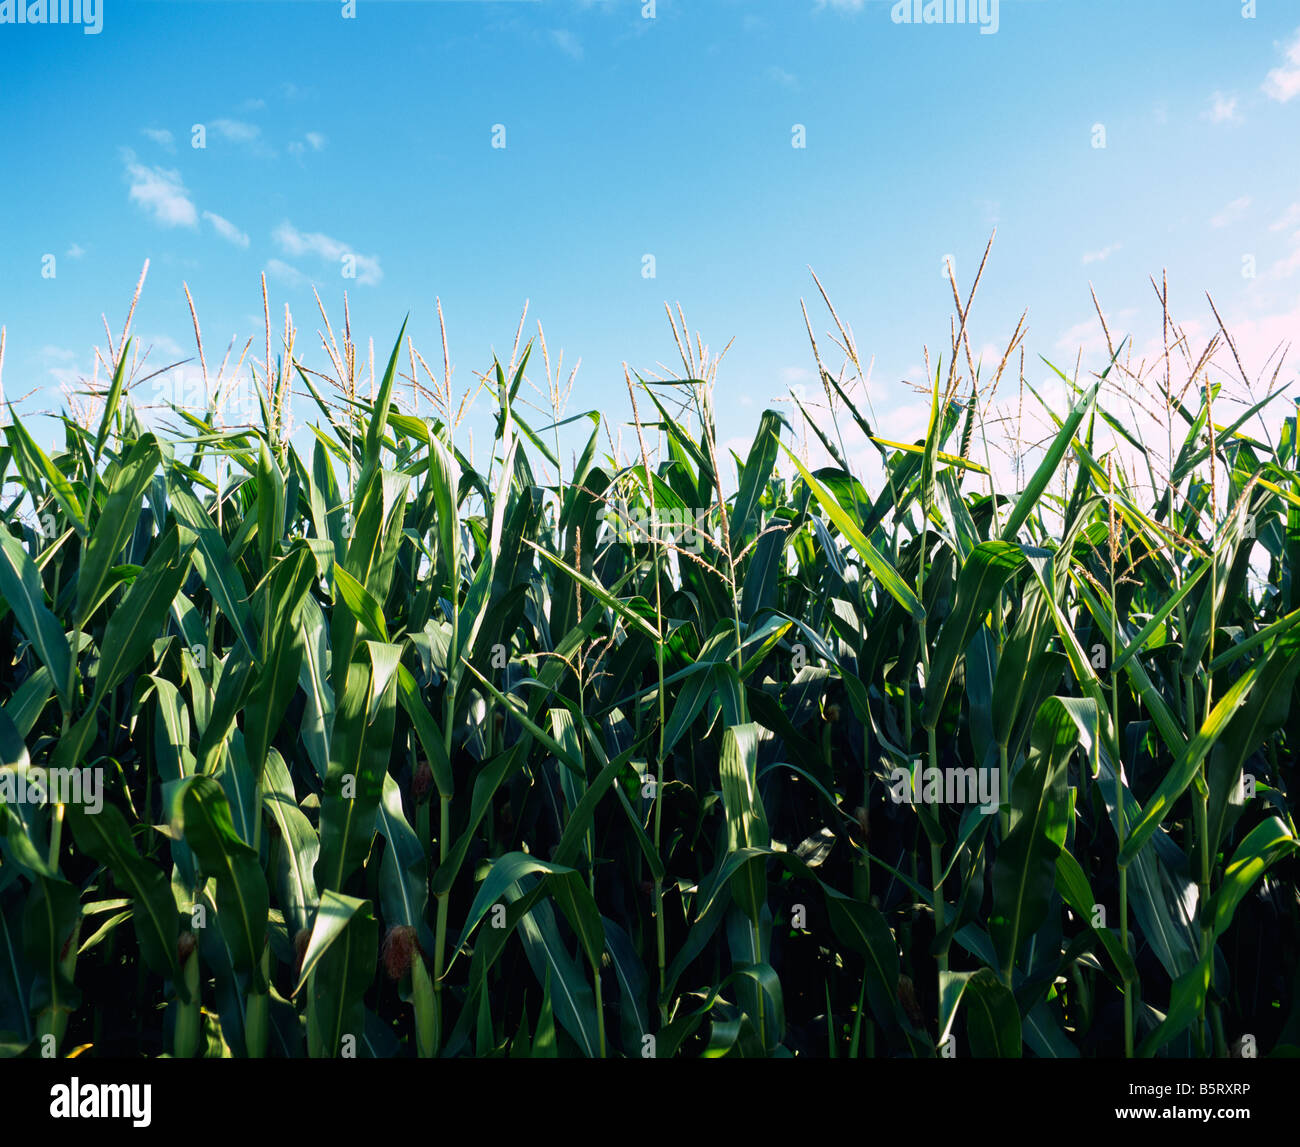 Maize growing under a blue sky at Naizin near Pontivy, France Stock Photo